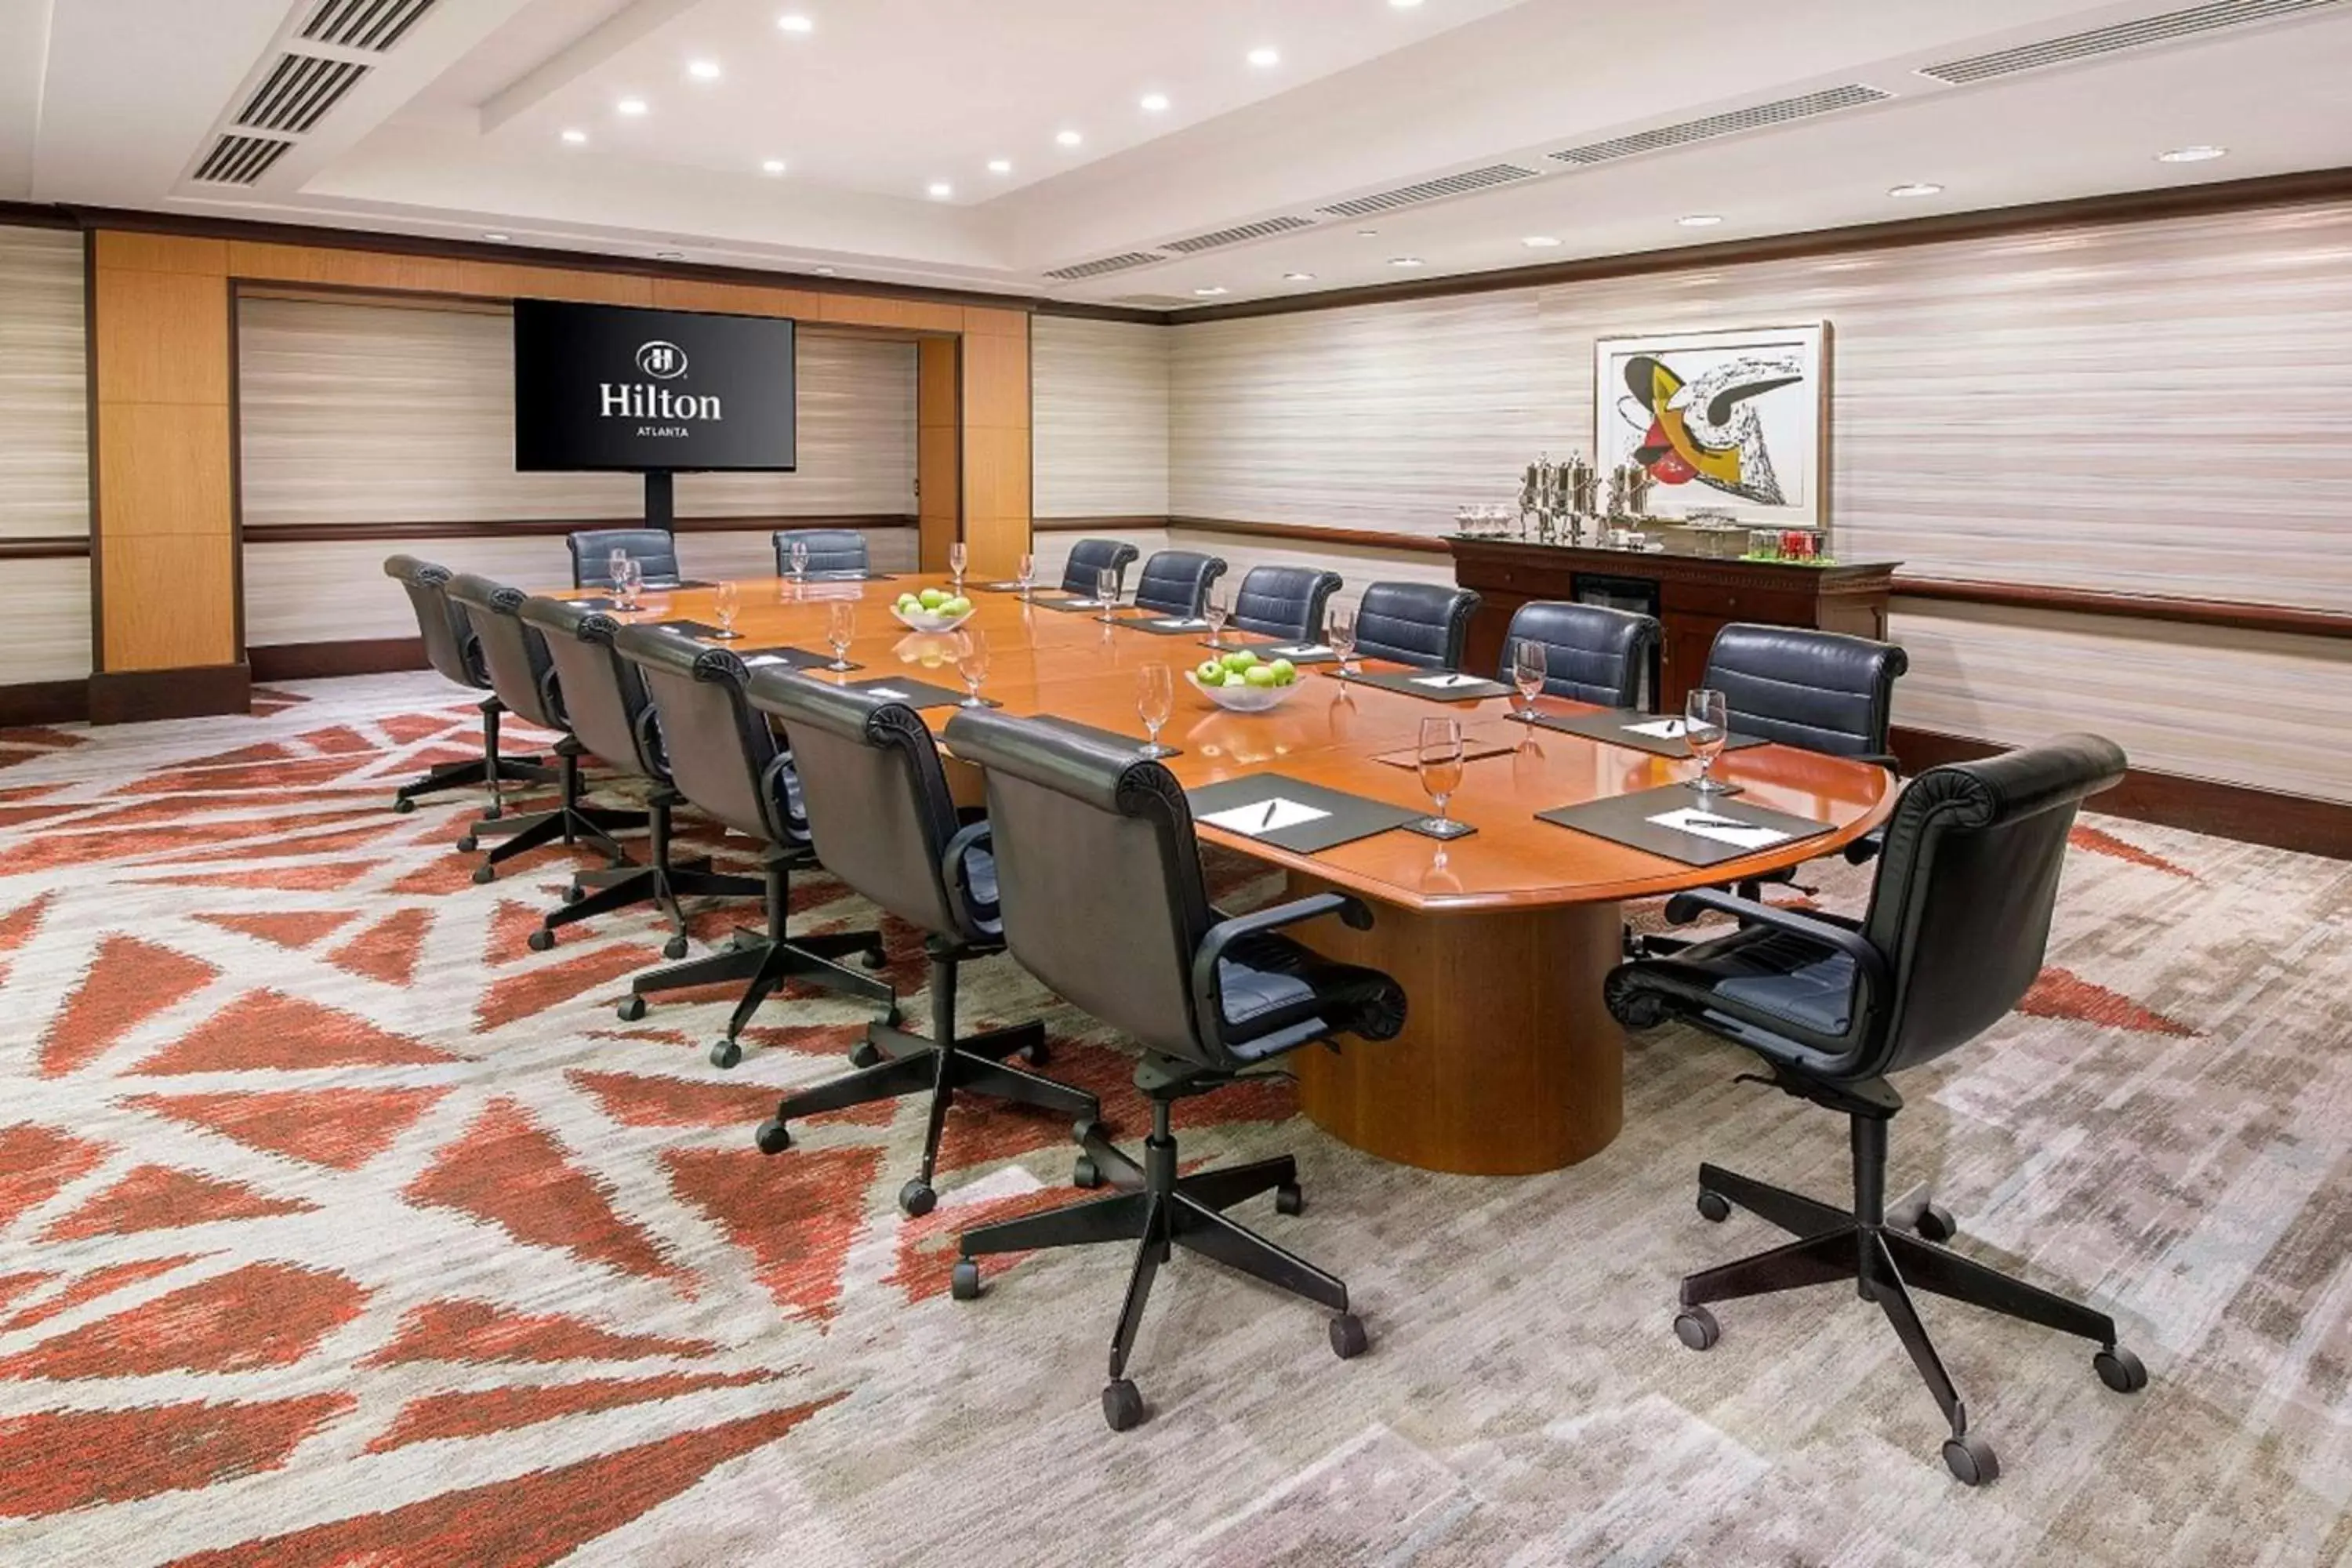 Meeting/conference room in Hilton Atlanta